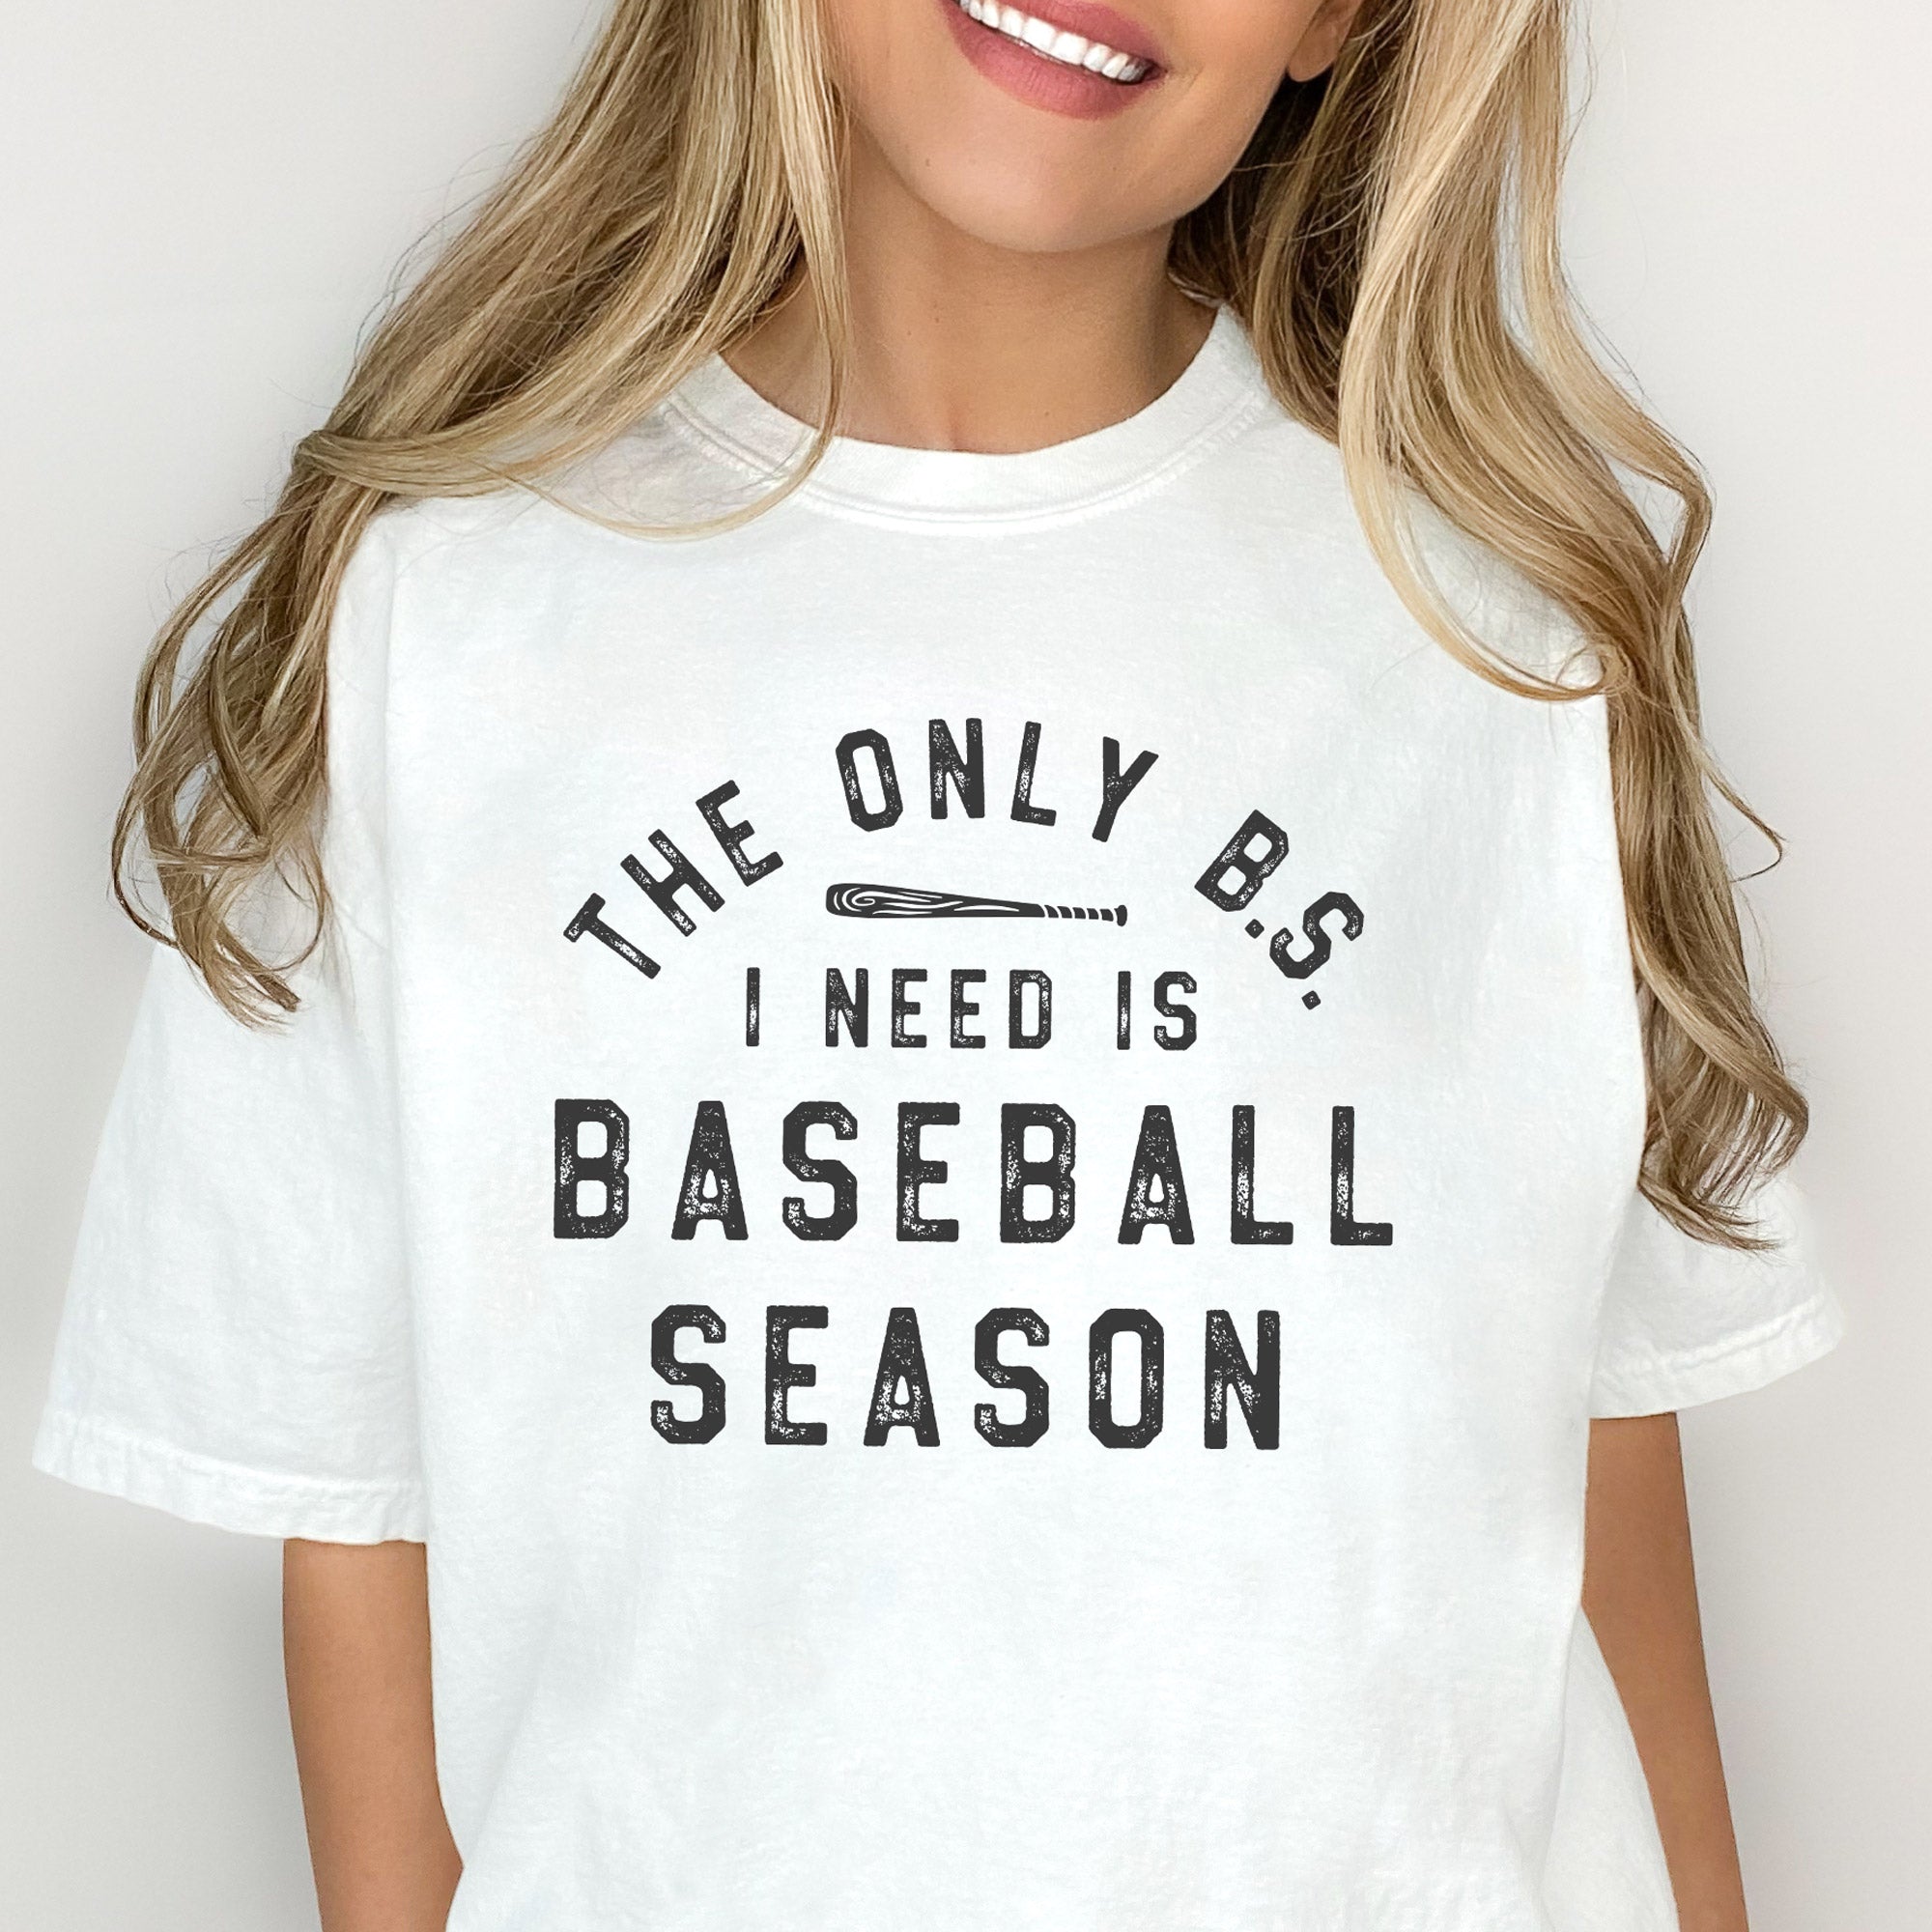 Final Season T-Shirts for Sale